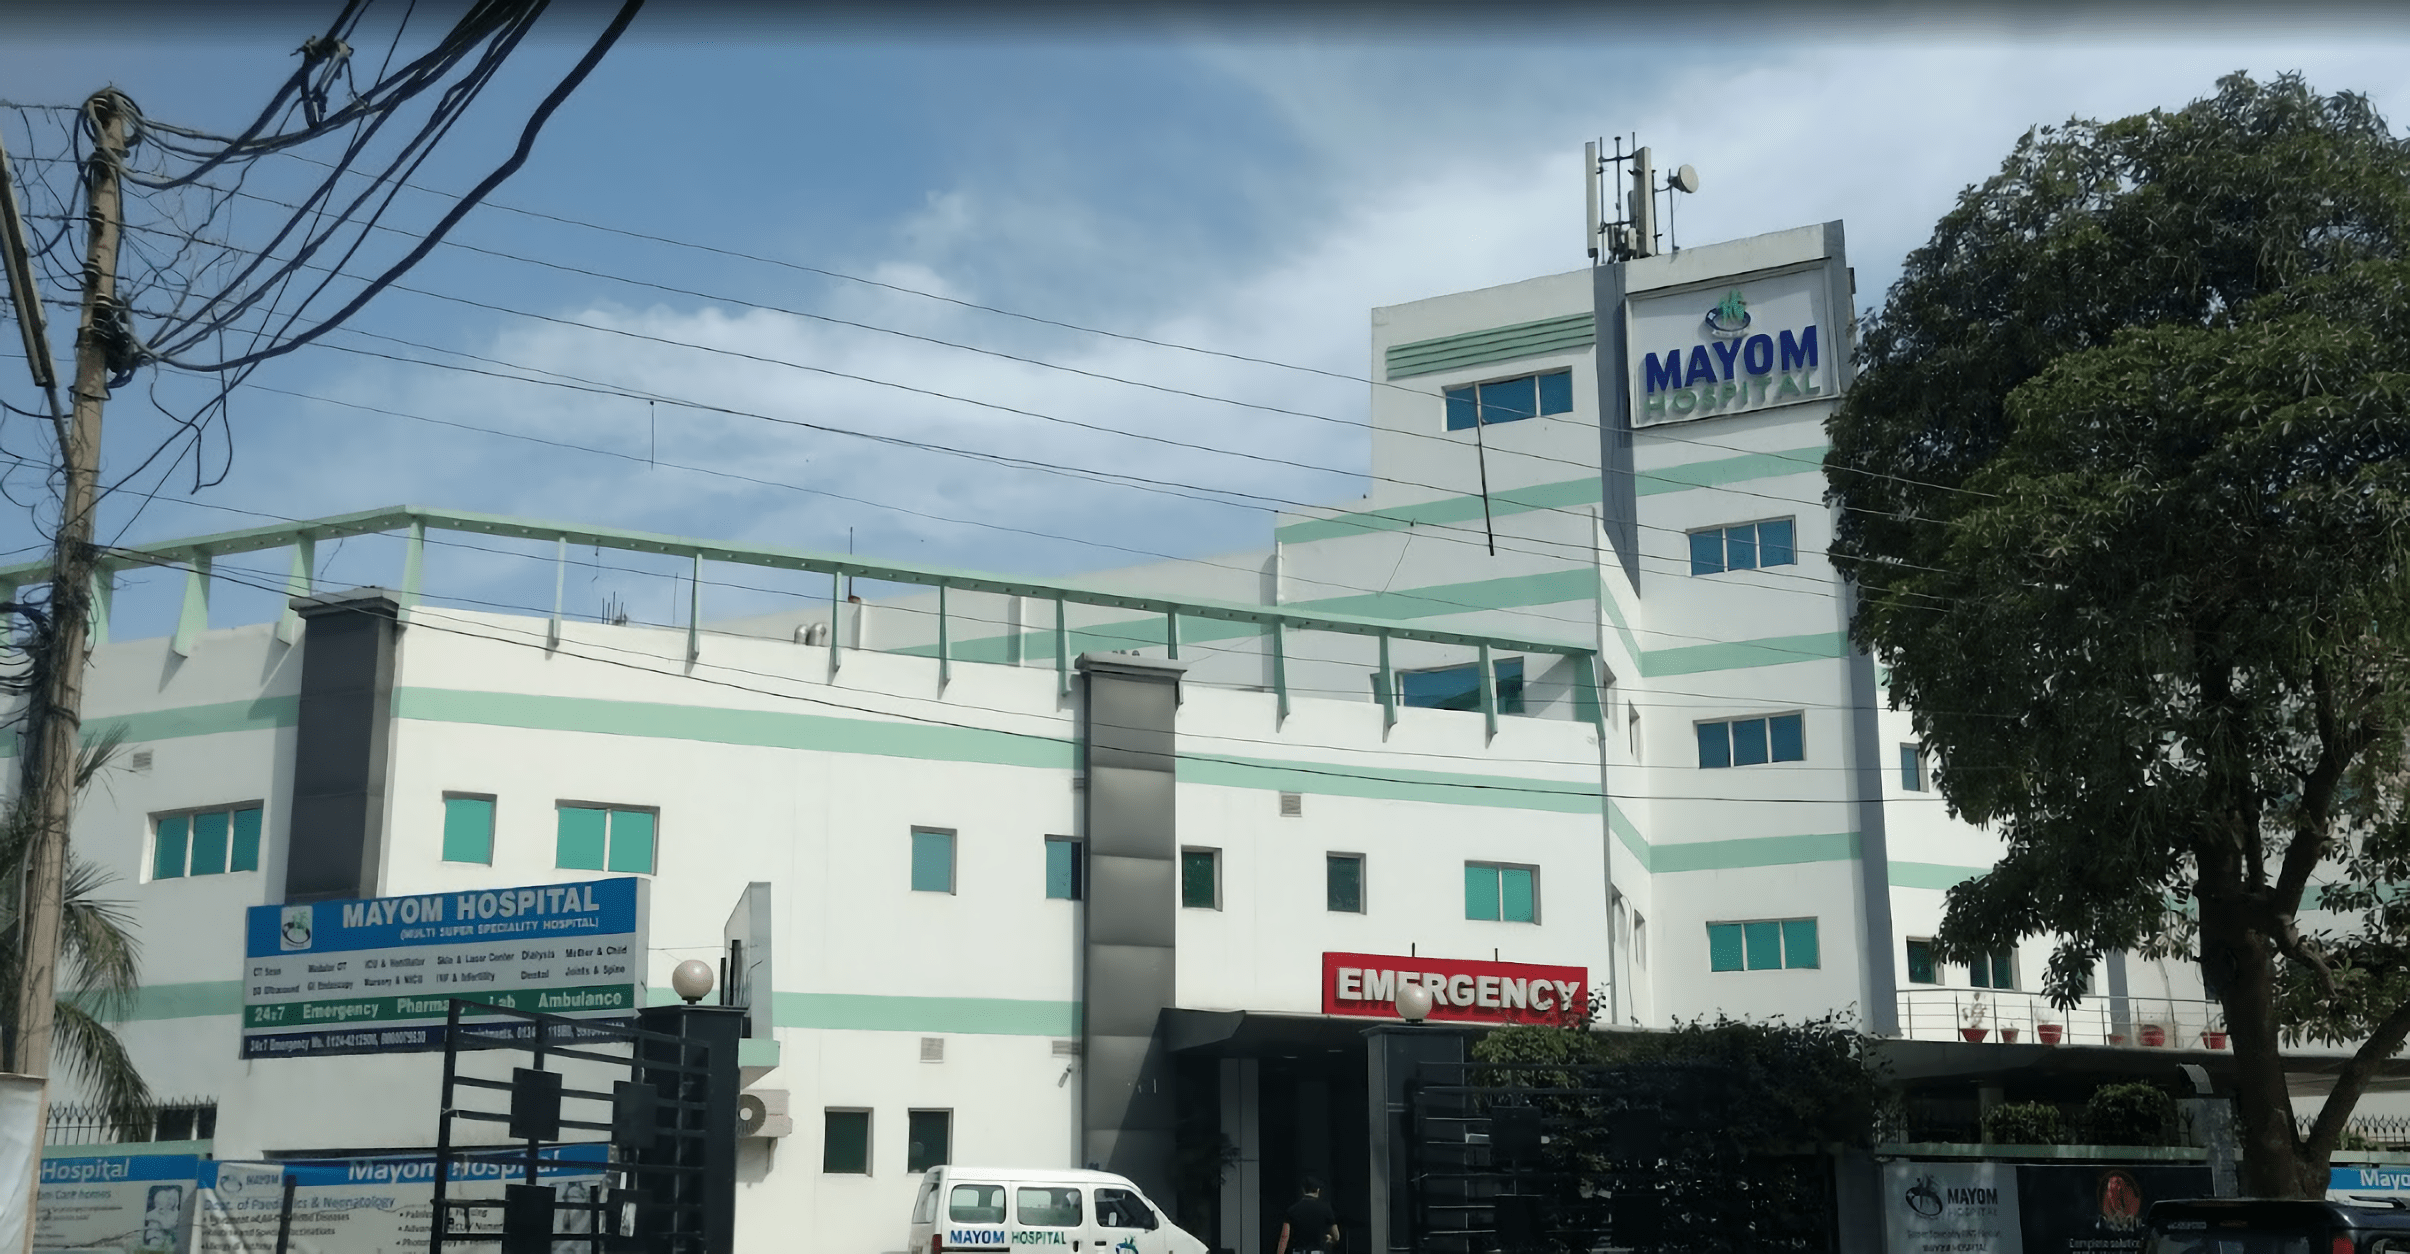 Mayom Hospital photo